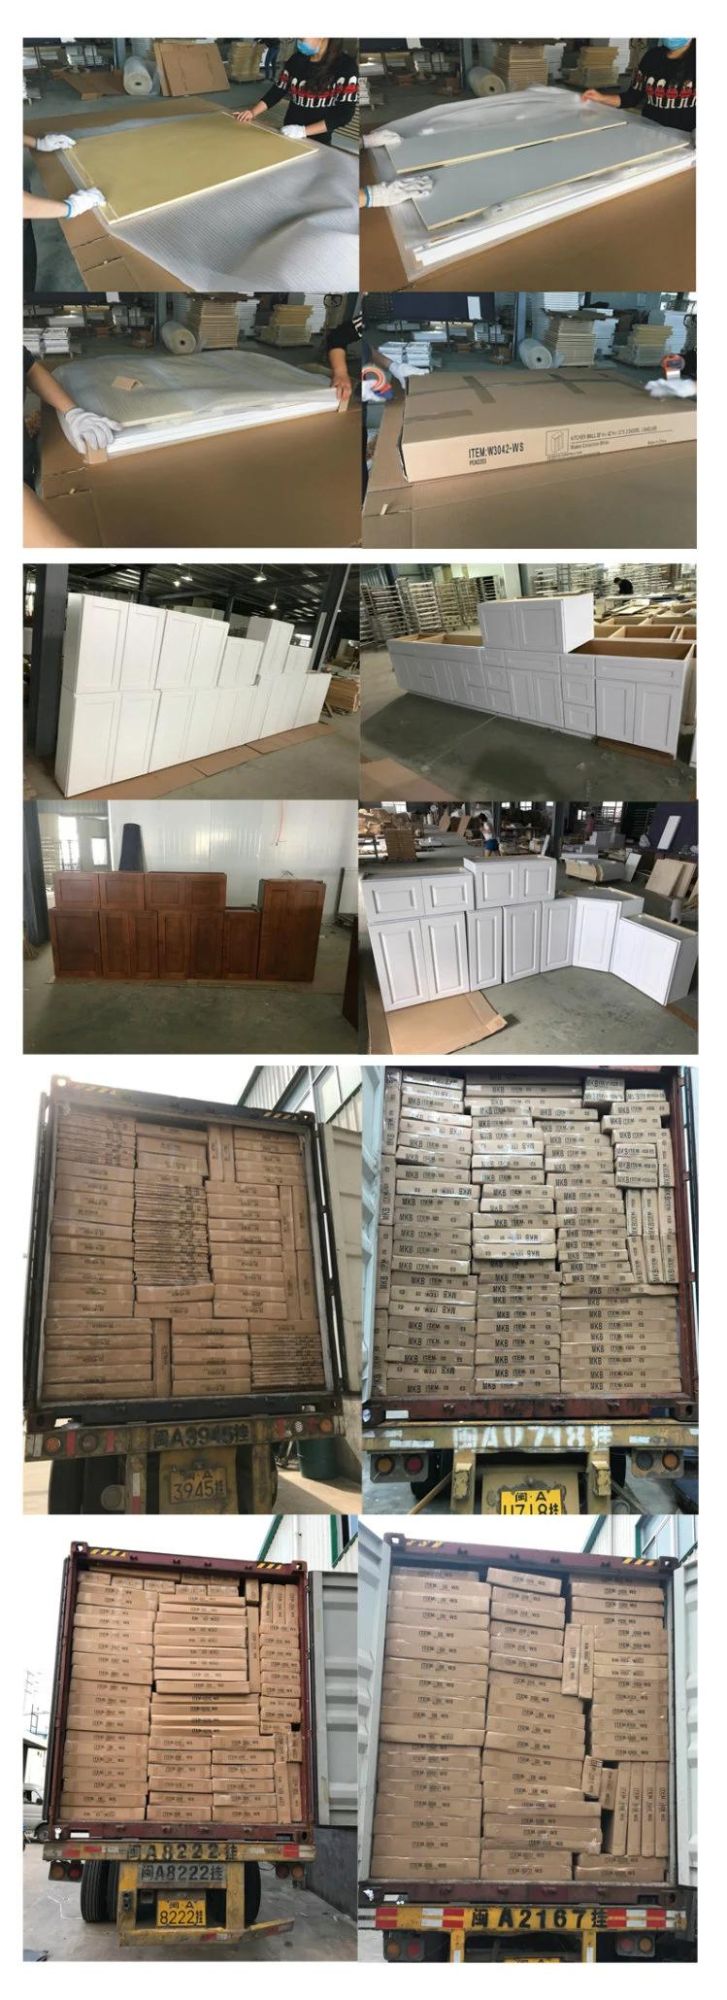 American Raised Panel Door Style Modular Kitchen Cabinets Solid Wood